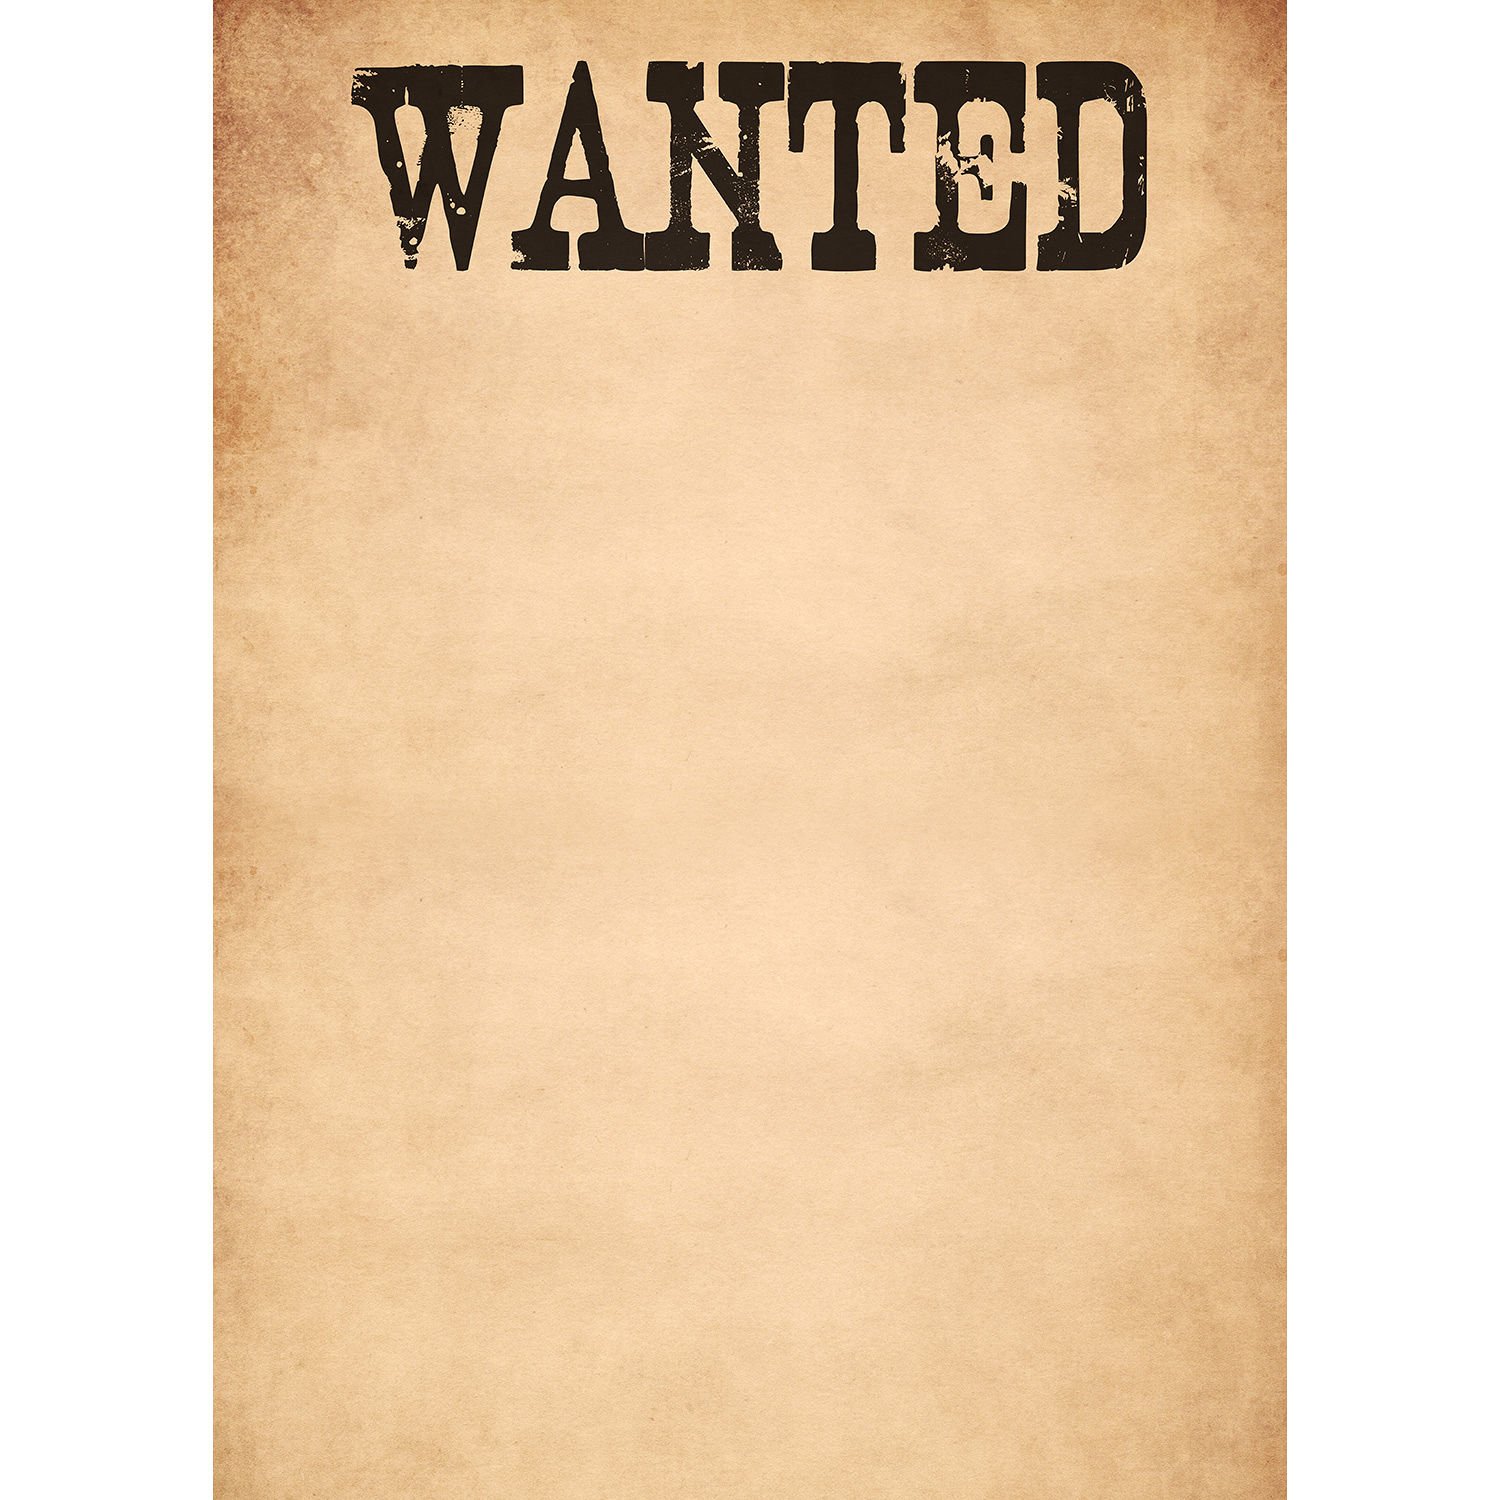 Обложка wanted. Wanted плакат. Плакат разыскивается. Листовка разыскивается. Рамка wanted.